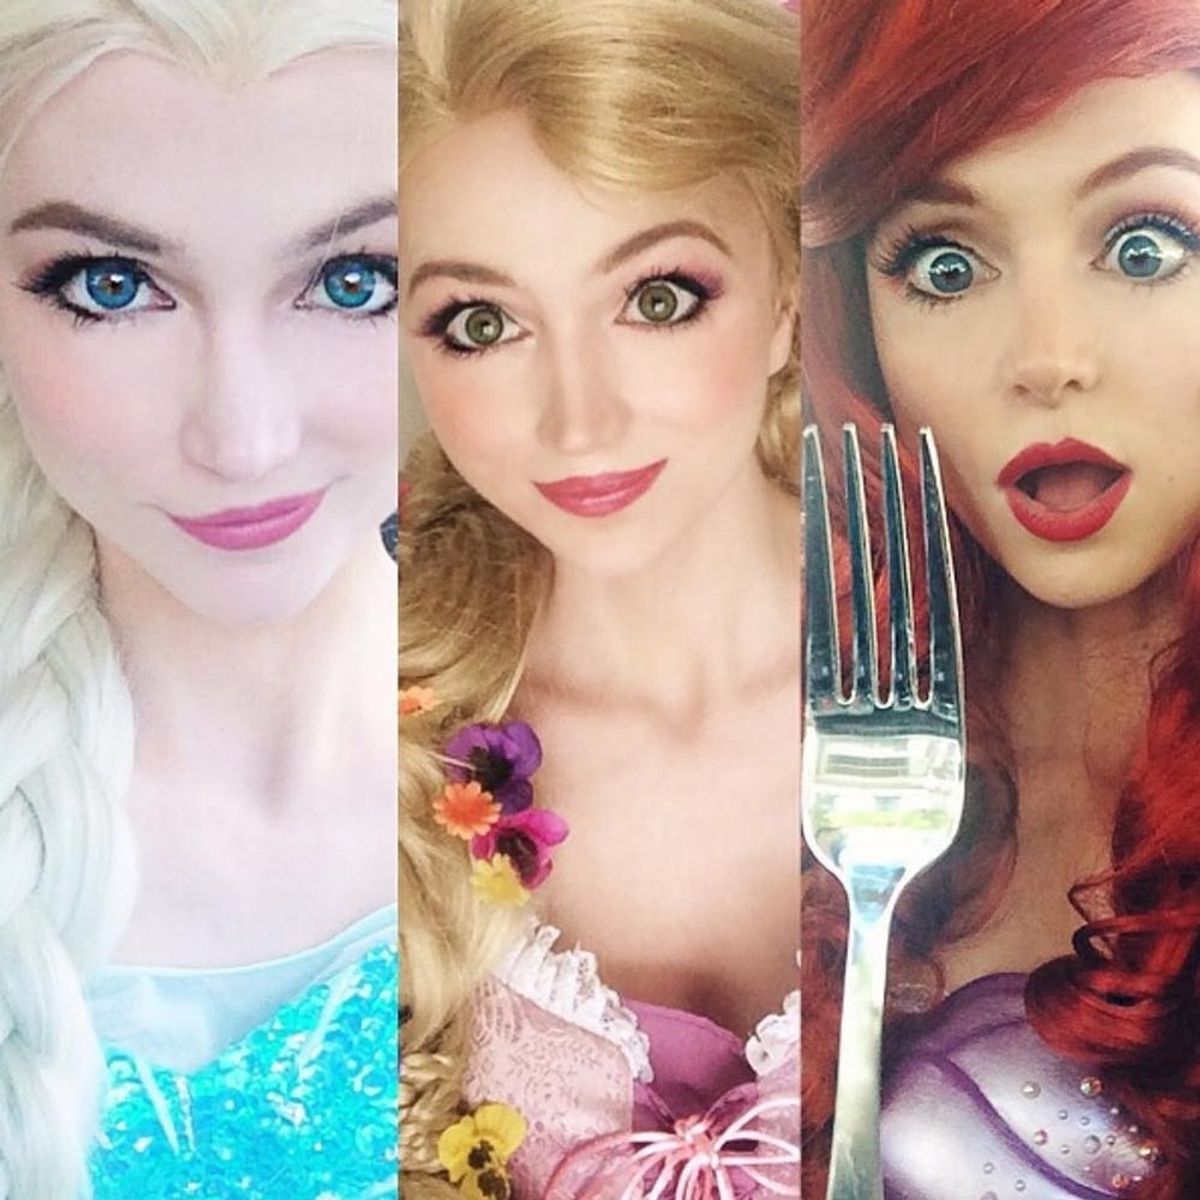 This Woman Has Paid $14K to Transform into Disney Princesses